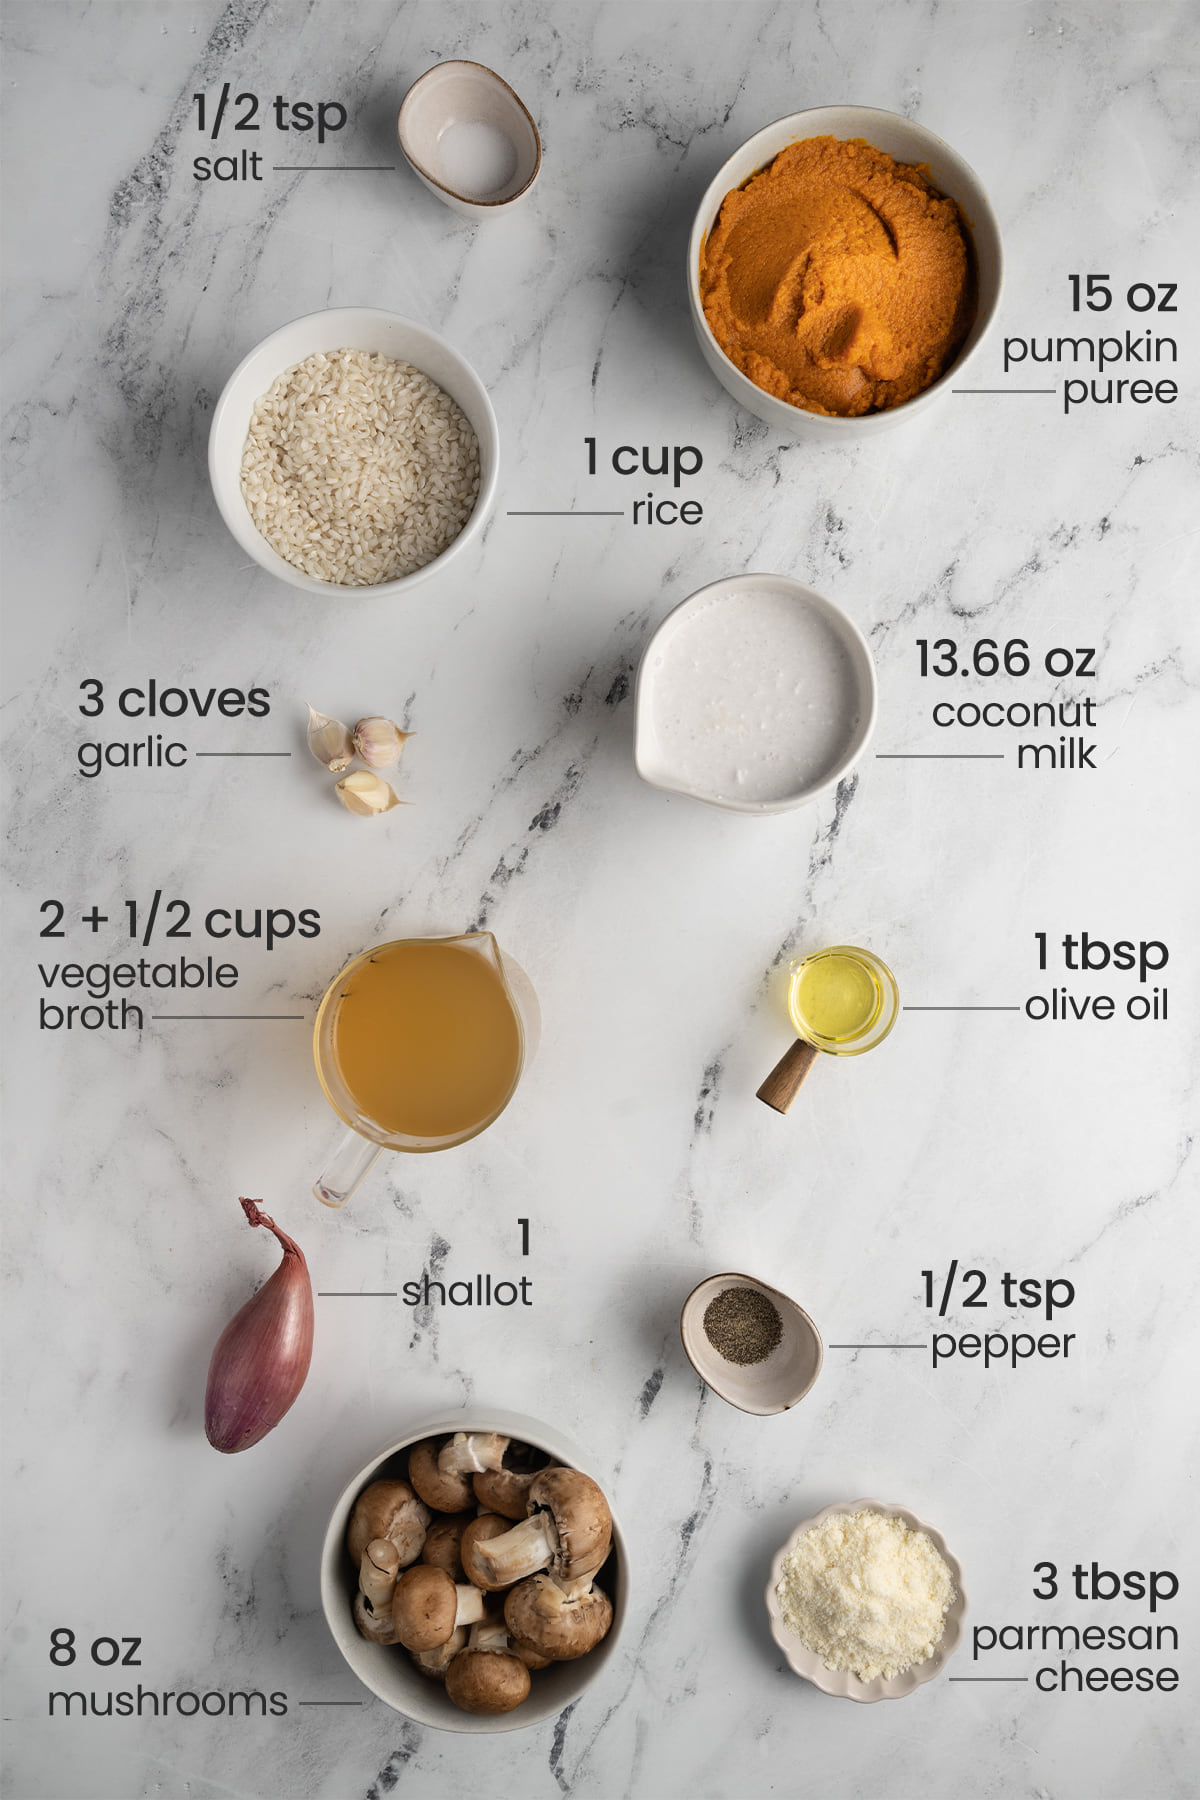 ingredients for pumpkin mushroom risotto - salt, pumpkin puree, rice, coconut milk, garlic, vegetable broth, olive oil, shallot, pepper, mushrooms, parmesan cheese